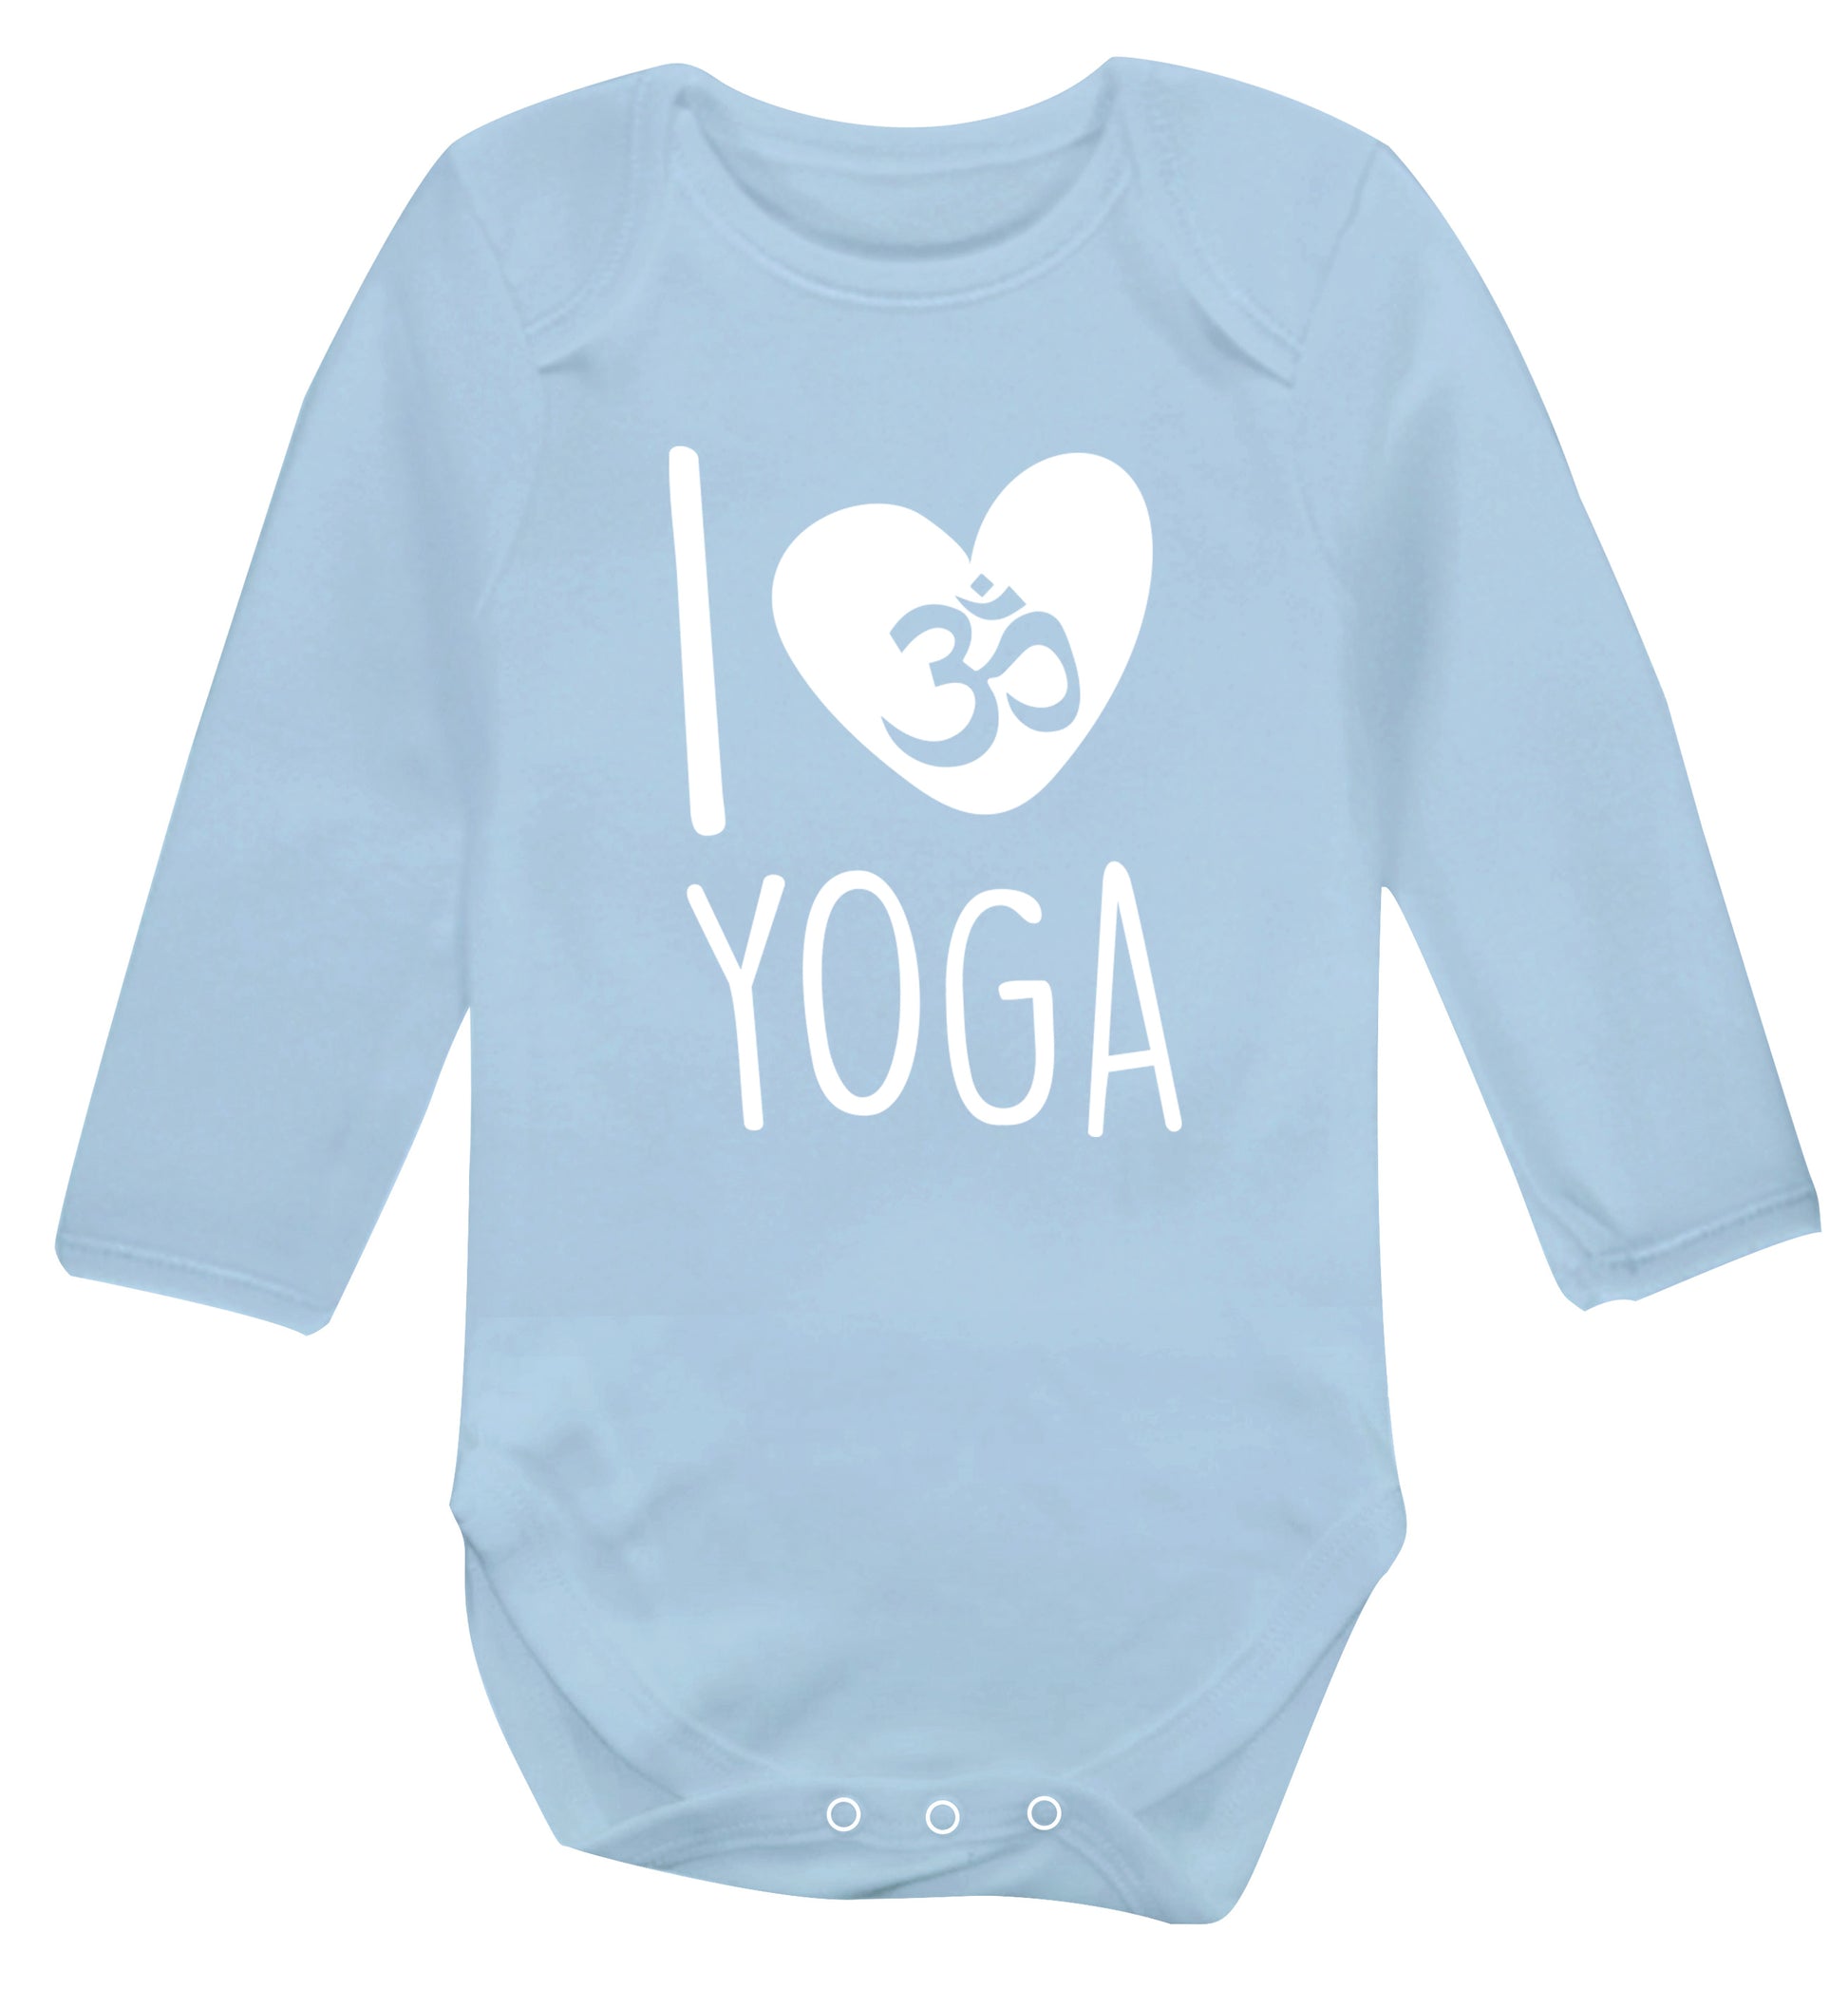 I love yoga Baby Vest long sleeved pale blue 6-12 months